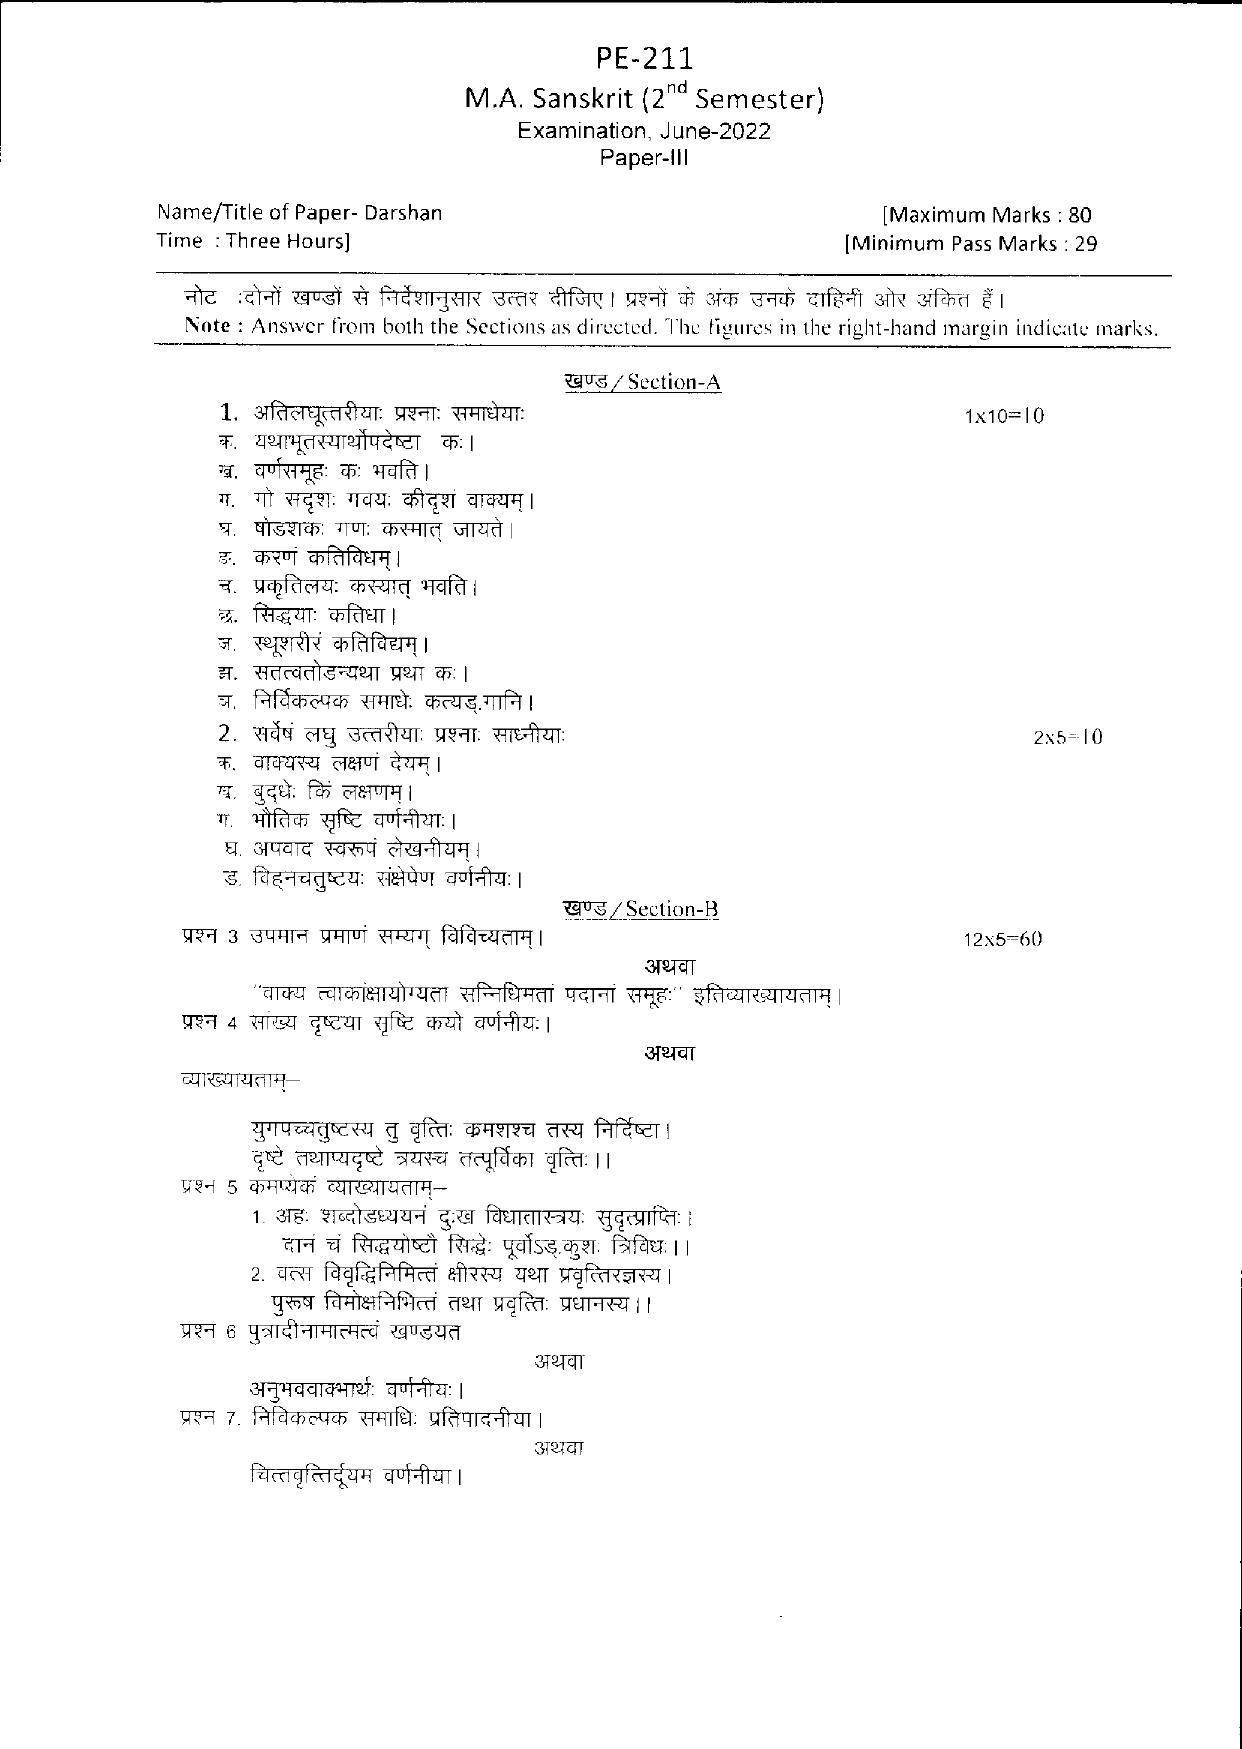 Bilaspur University Question Paper June 2022:M.A. Sanskrit (Second Semester) Darshan Paper 1 - Page 1